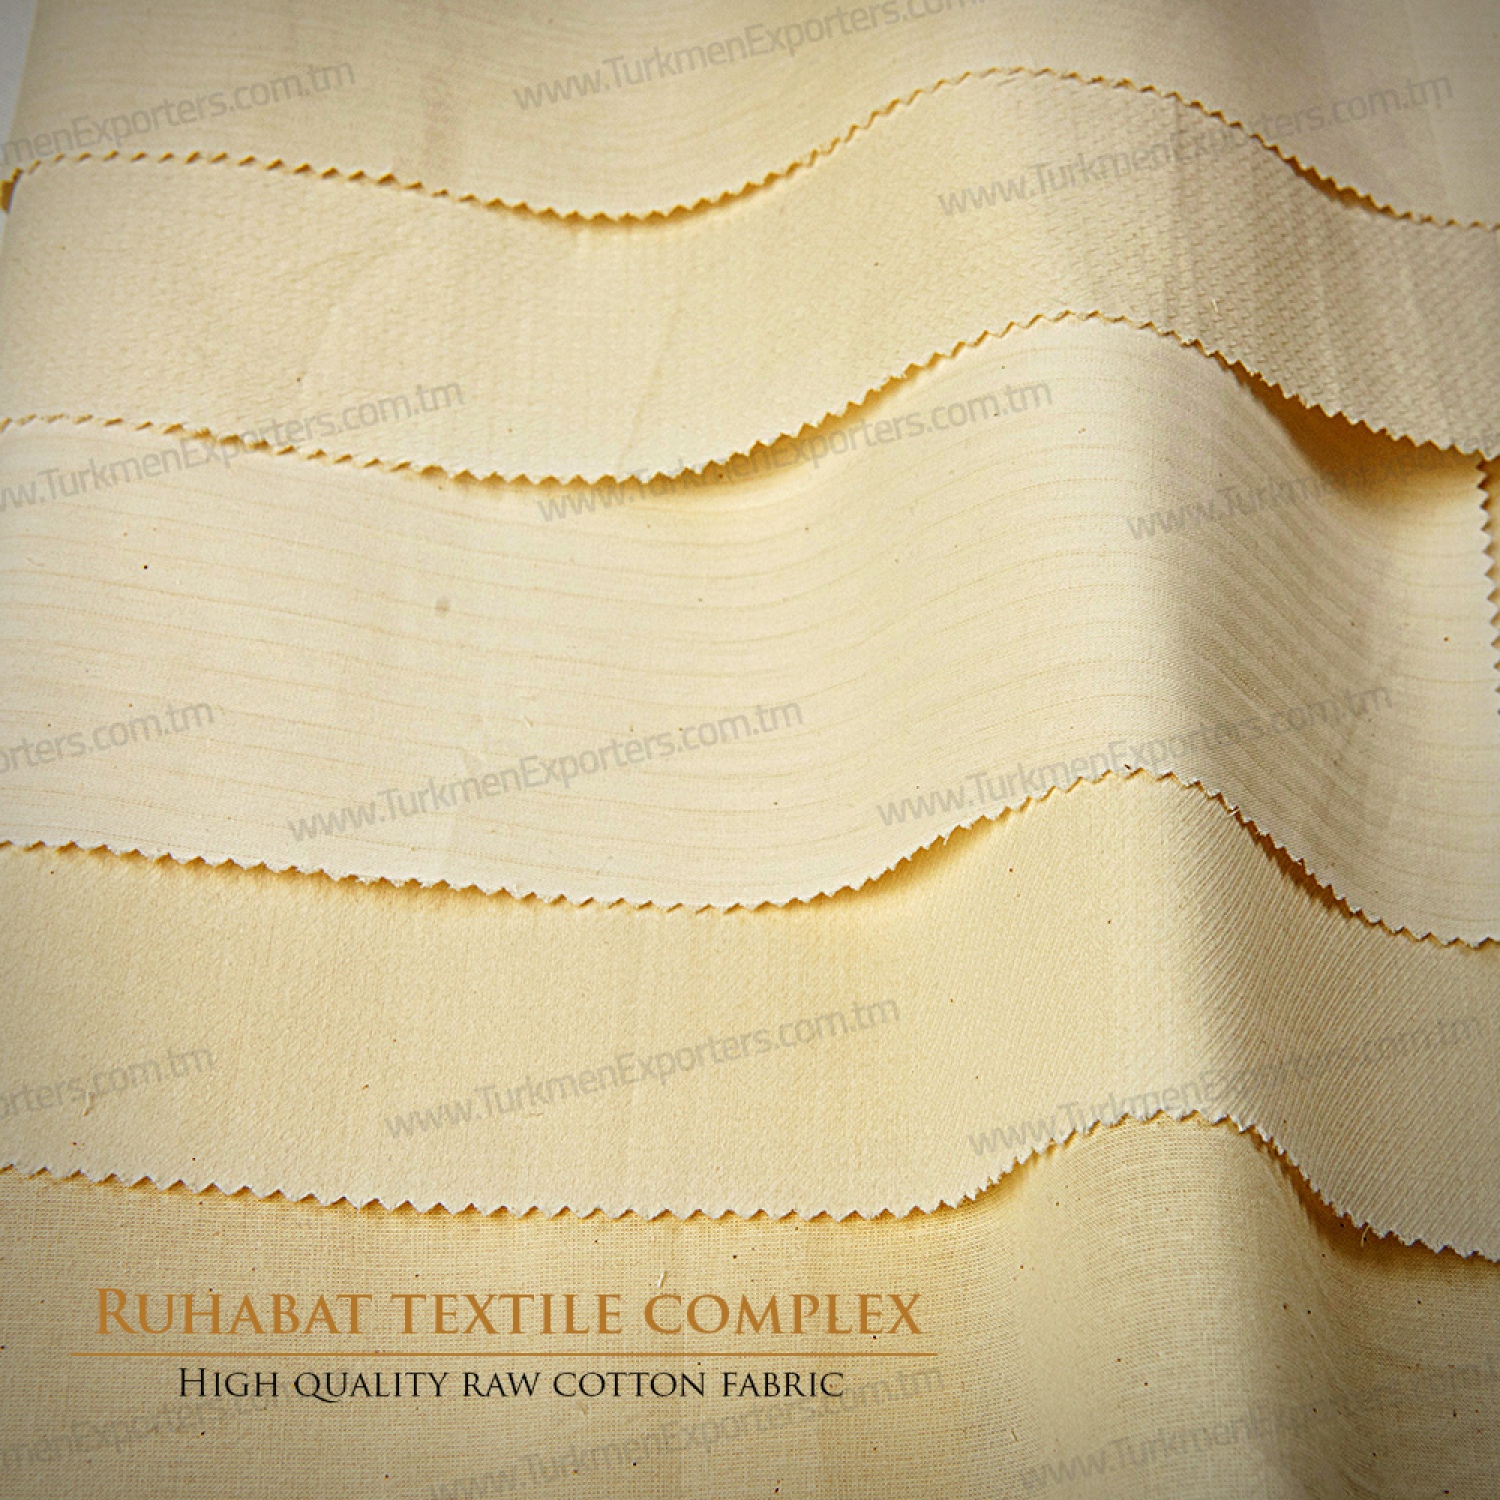 100% Cotton raw fabric Turkmenistan | Ruhabat Textile Complex